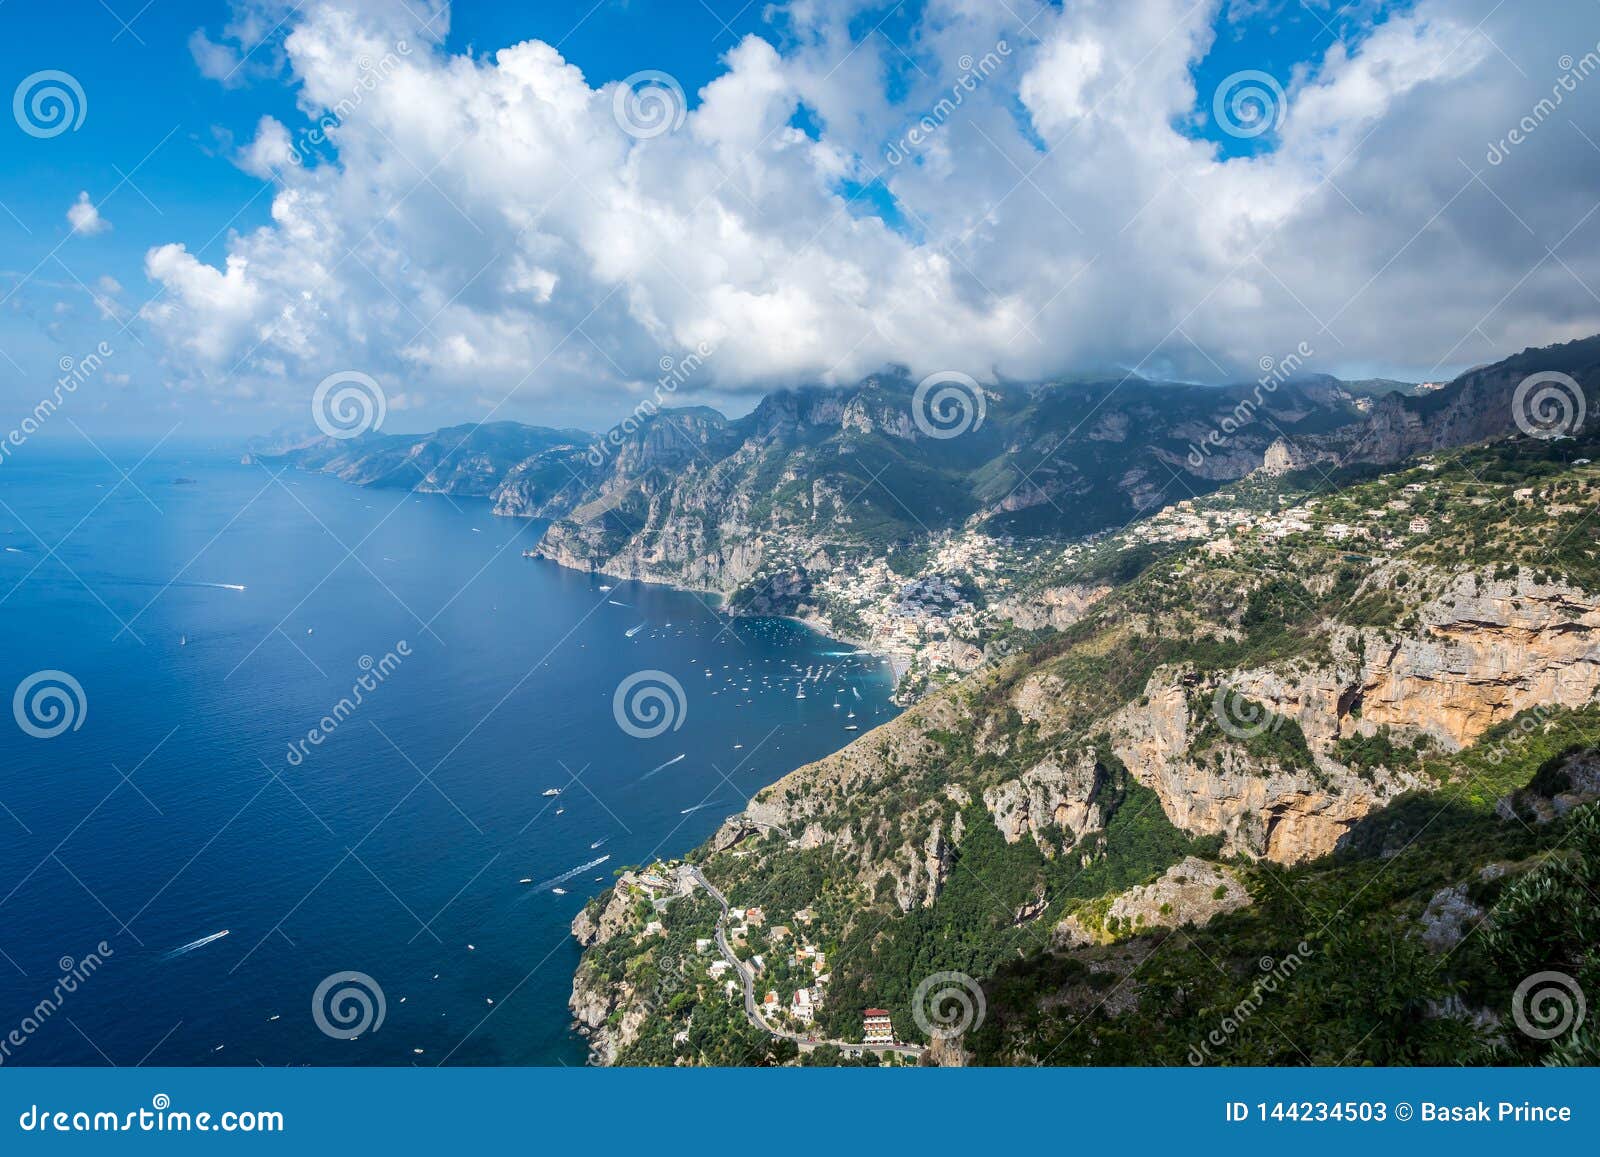 view from the path of the gods sentiero degli dei hike, looking over positano and amalfi coast